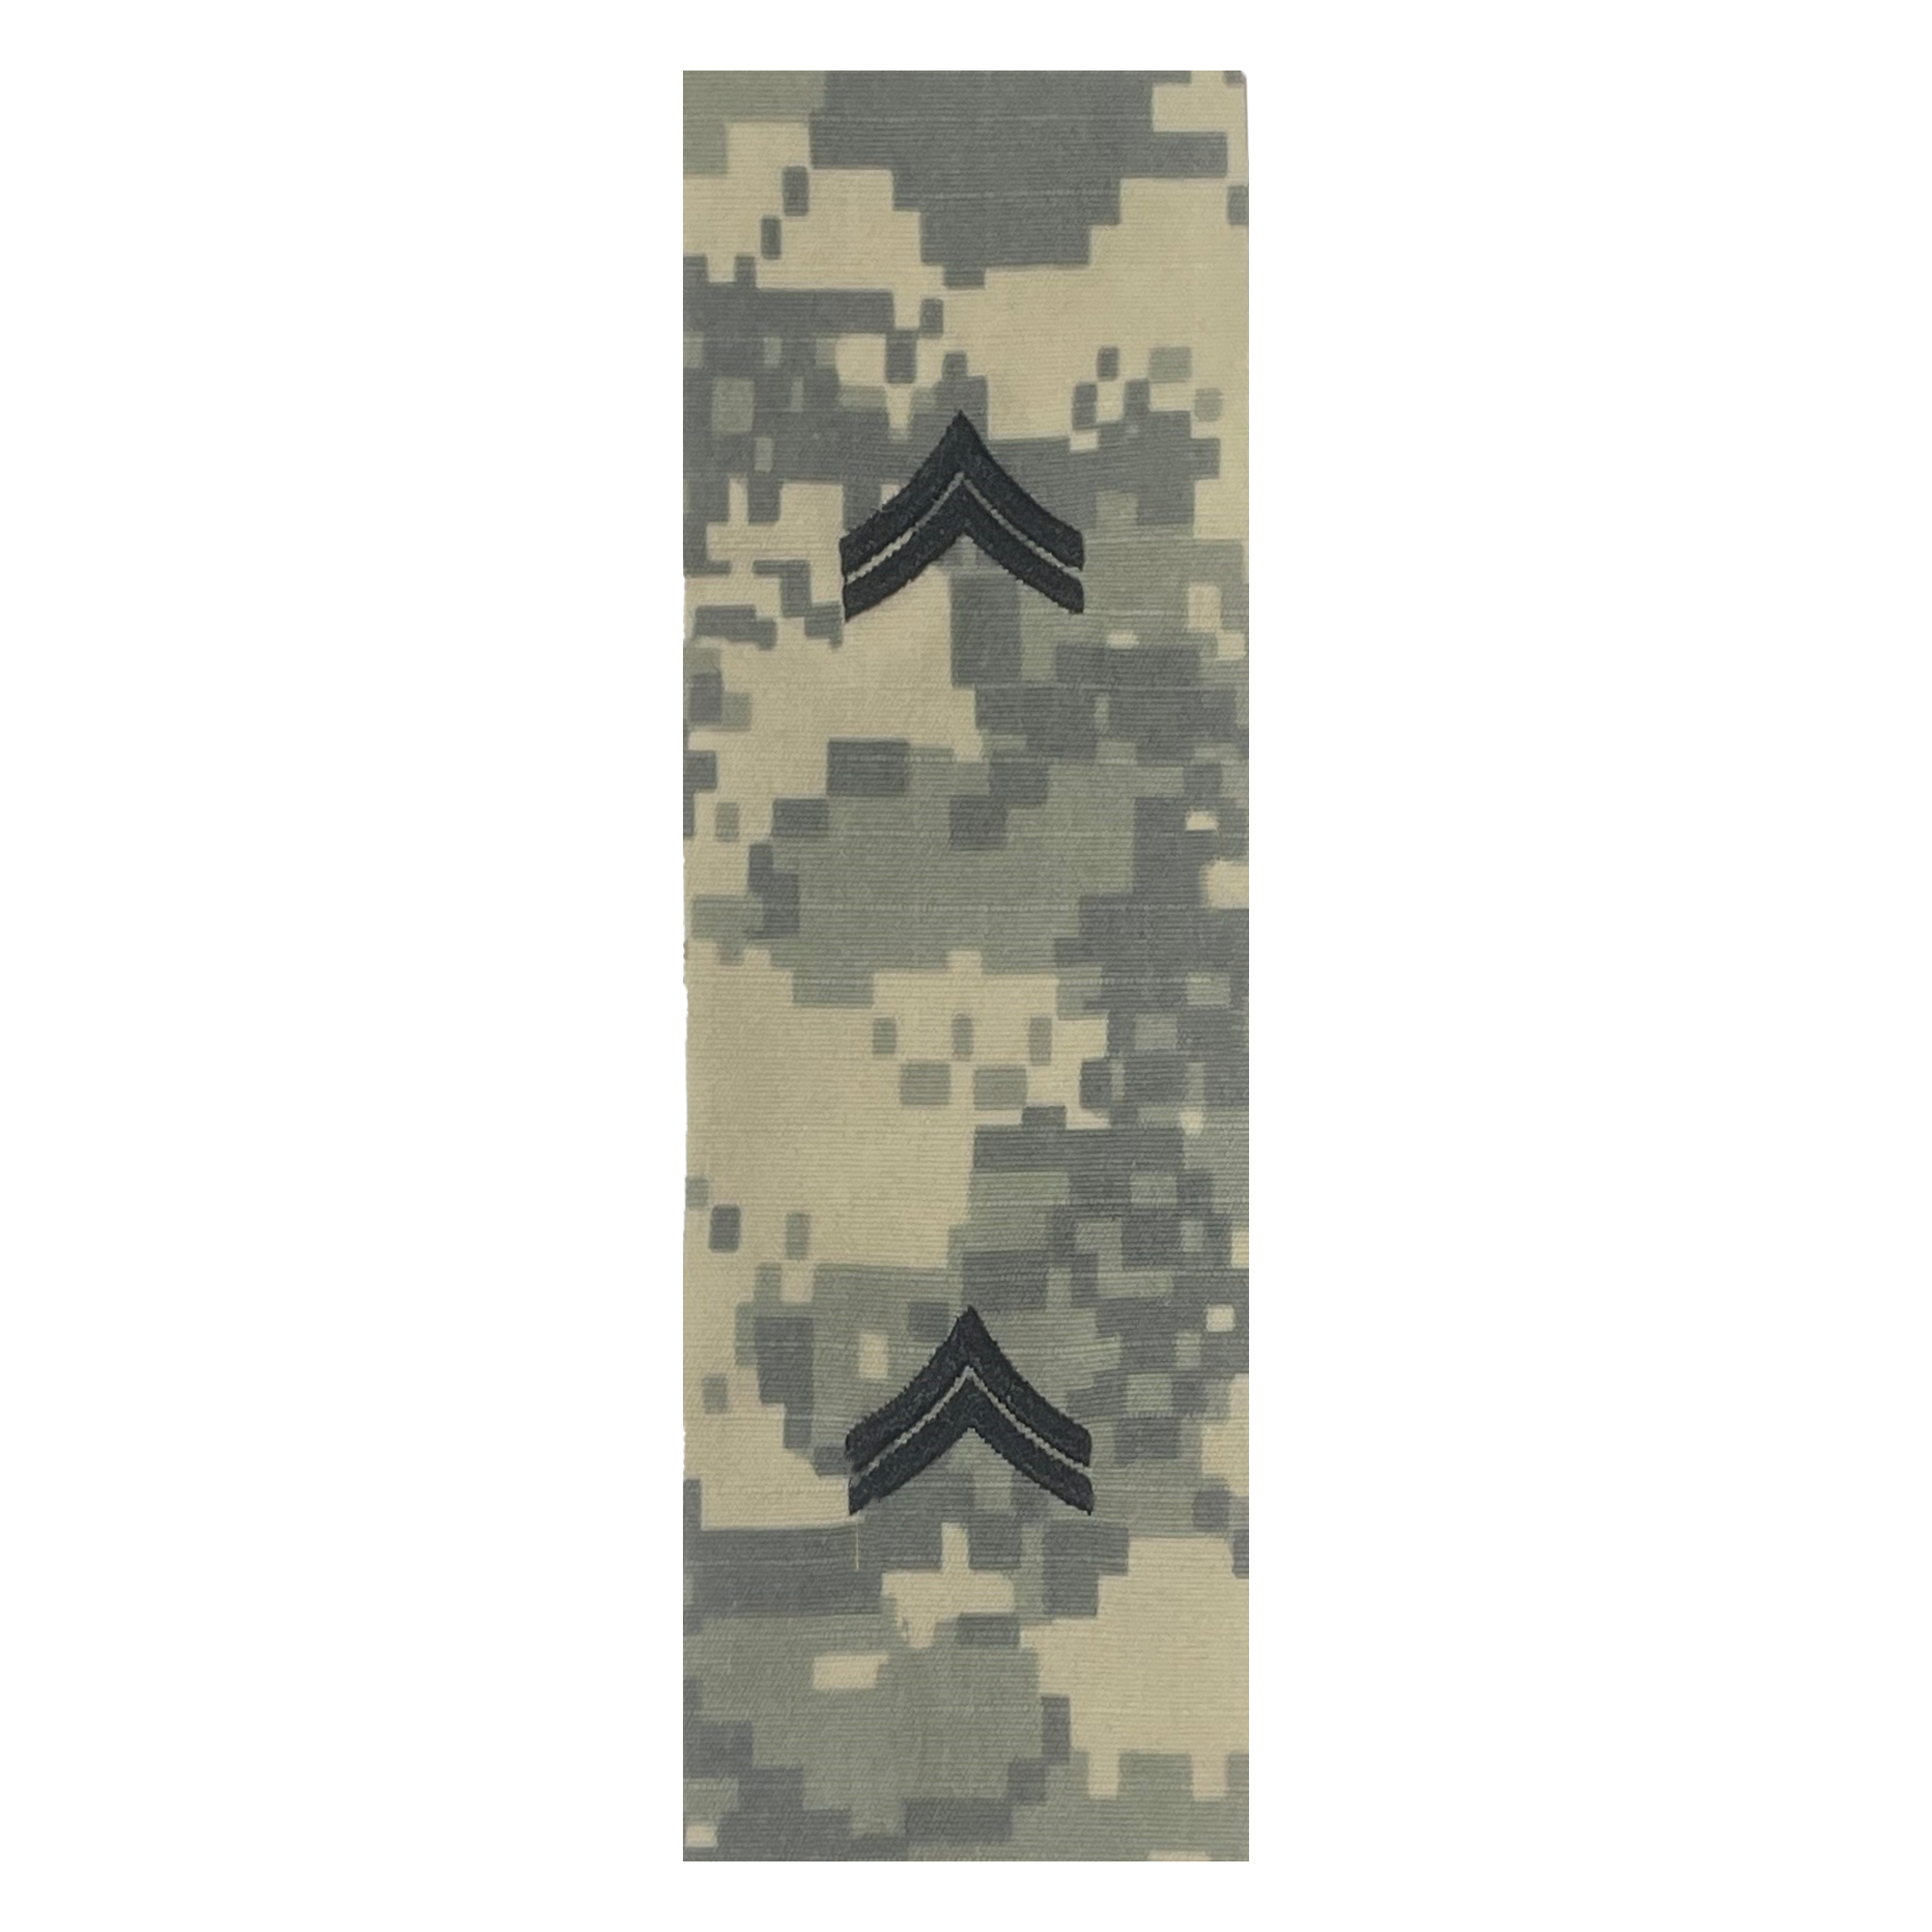 E4 Corporal ACU Sew-on (pair)